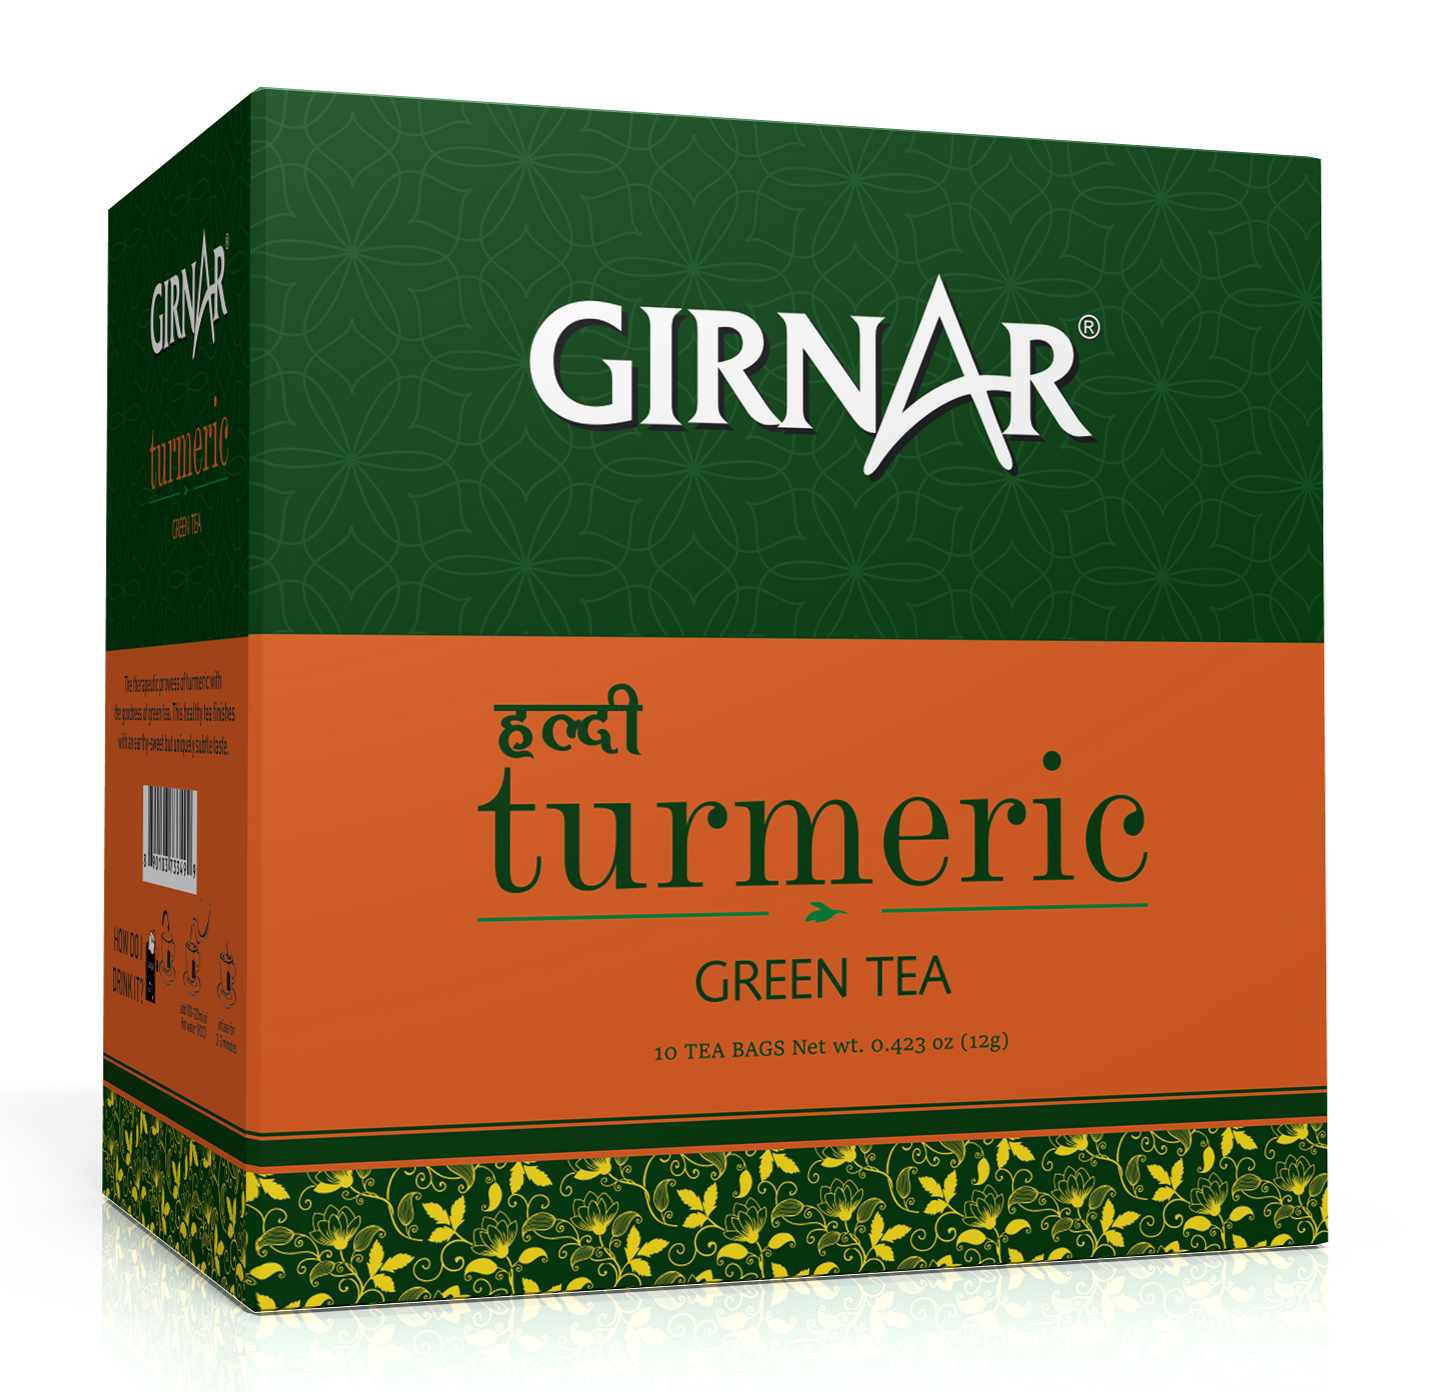 Girnar  - Green Tea - Turmeric Green Tea - Box of 10